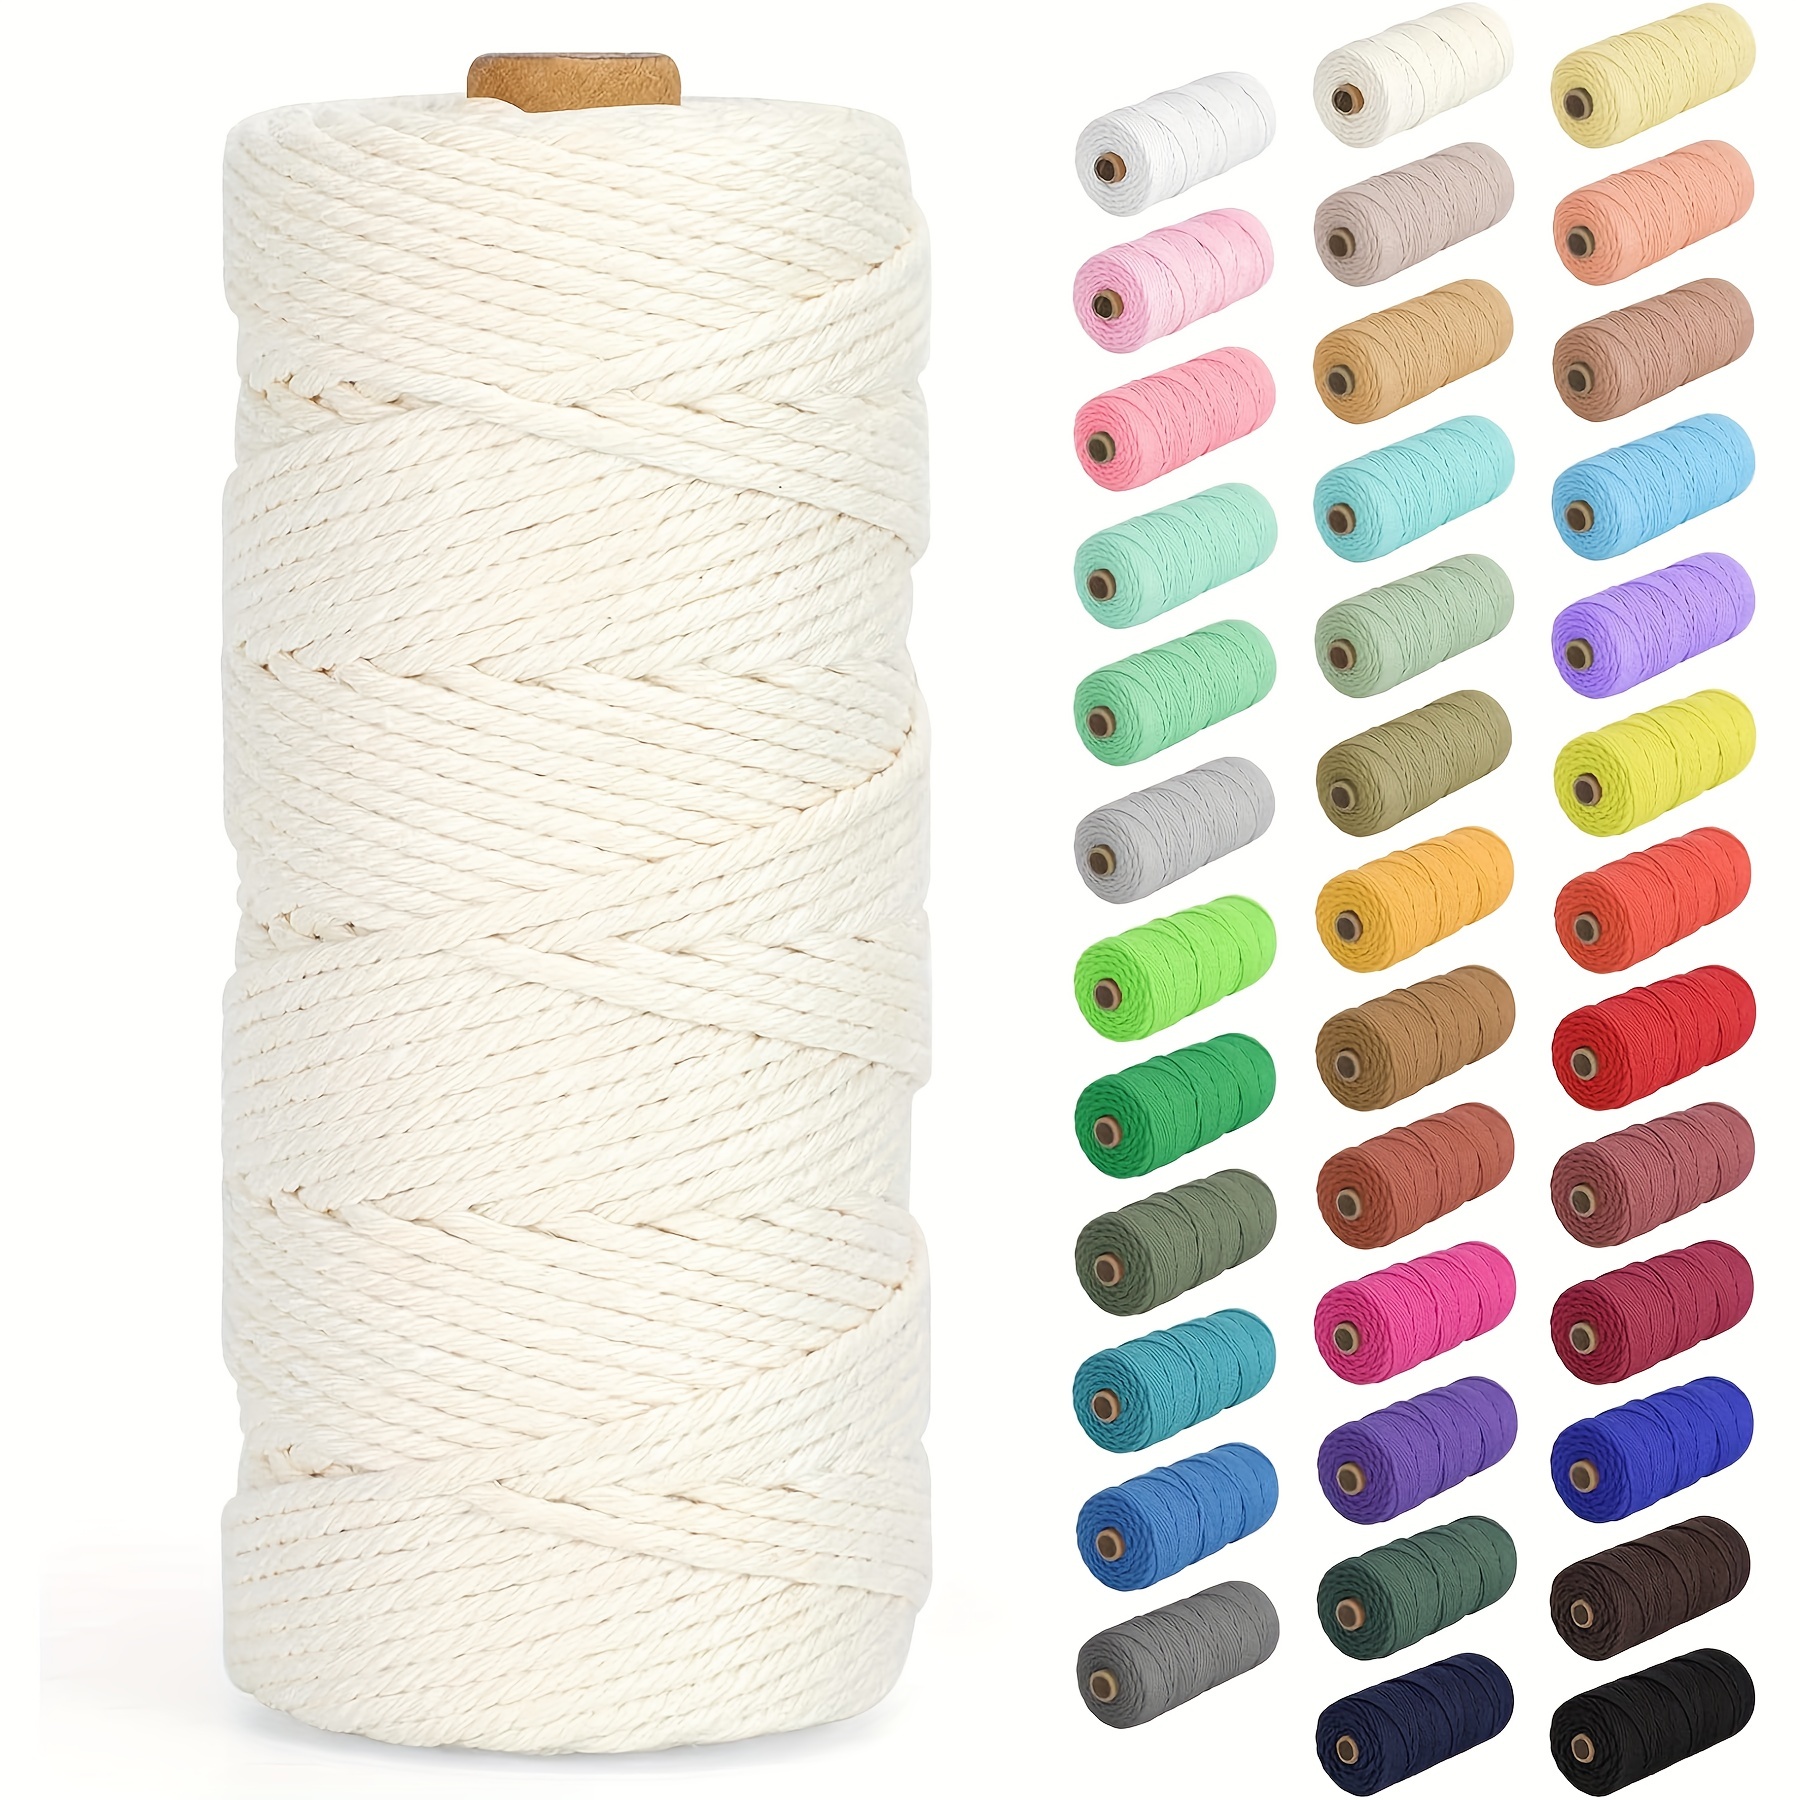 Natural White 100% Cotton Braided Cord Rope Craft Macrame Artisan